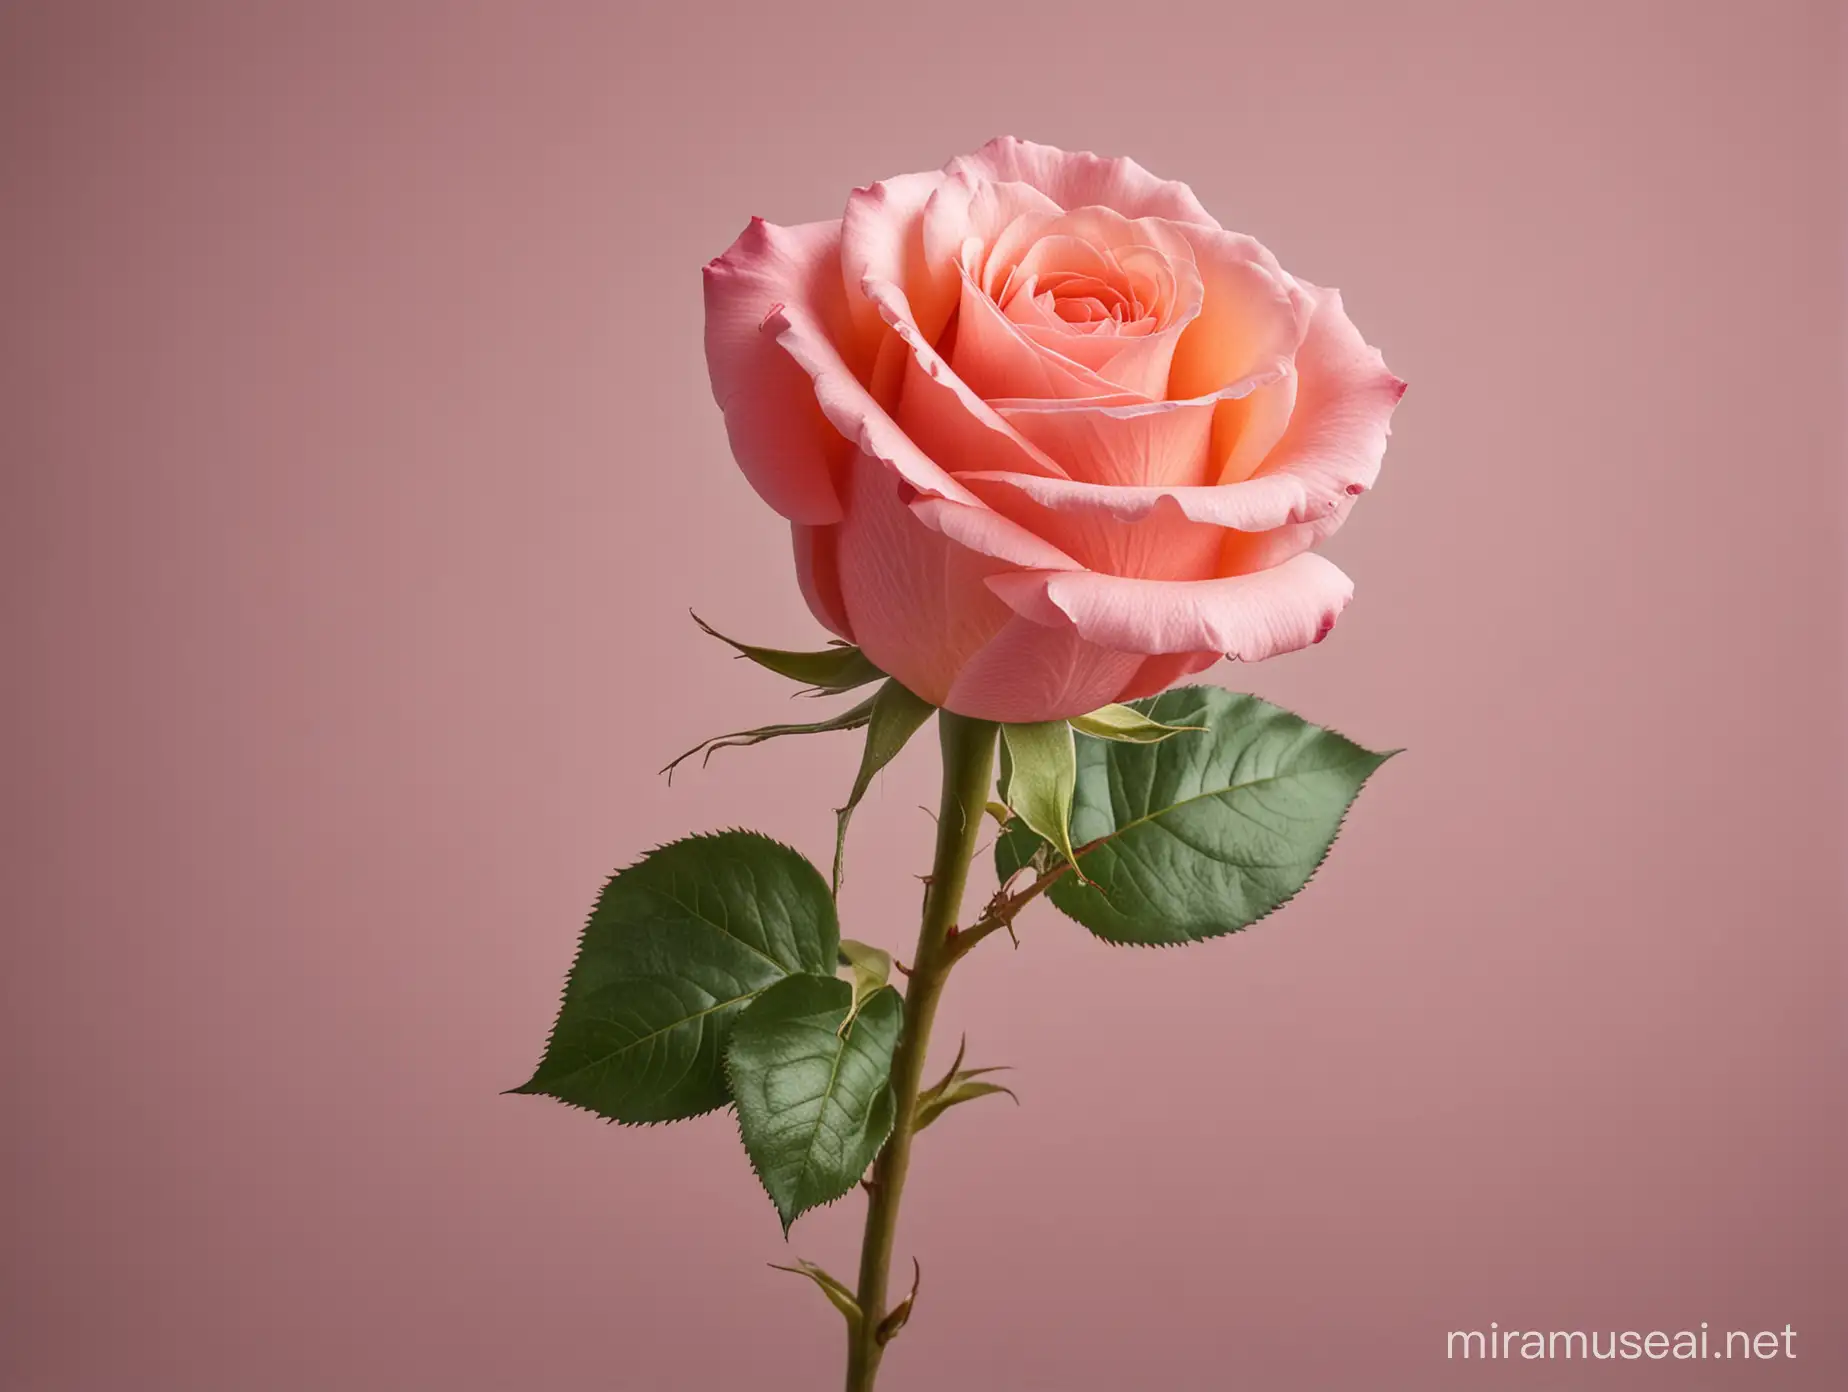 Vibrant Isolated Rose Blossom on White Background